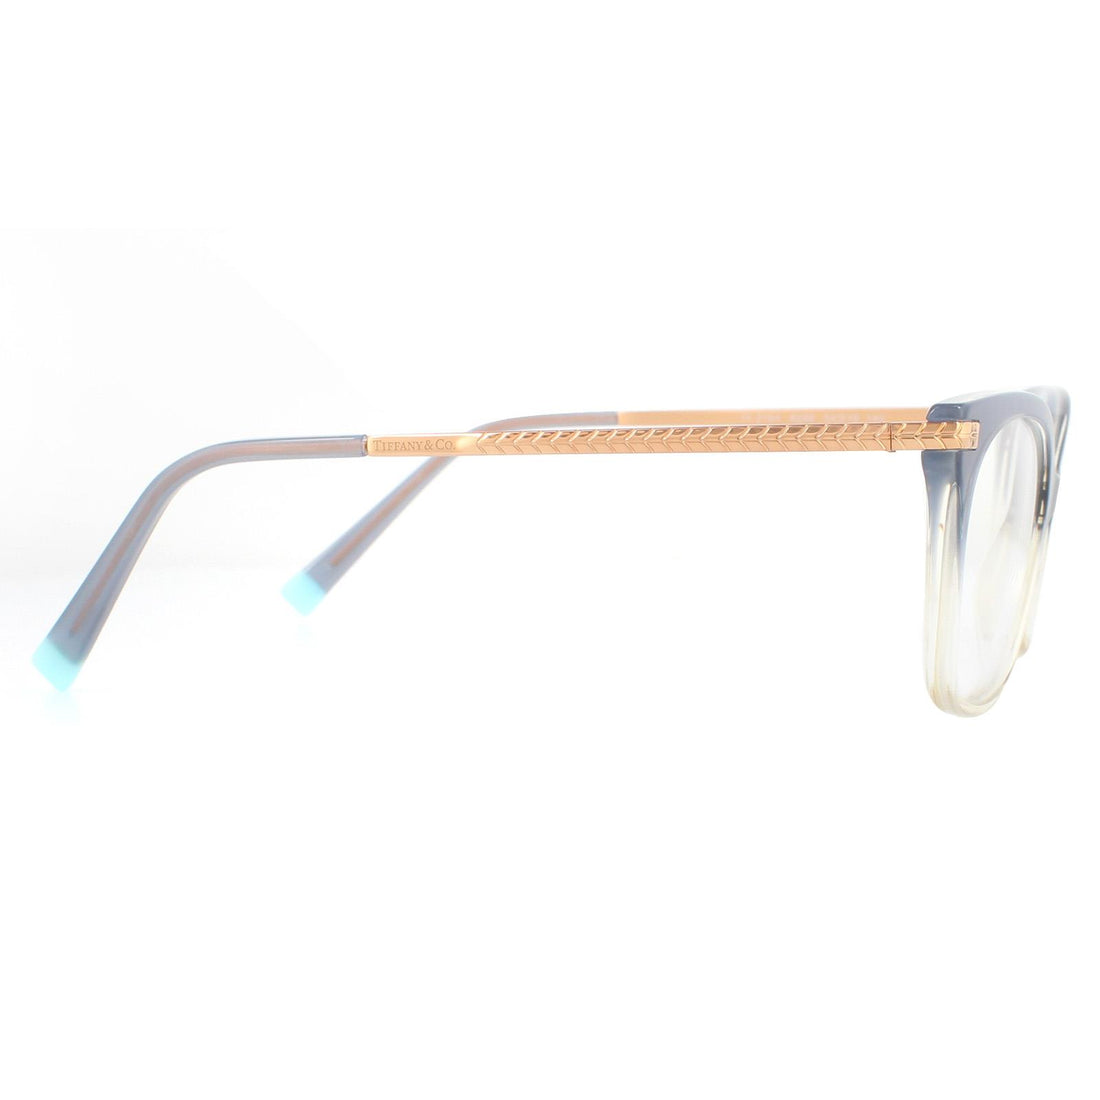 Tiffany Glasses Frames TF2194 8298 Grey Blue Gradient Women